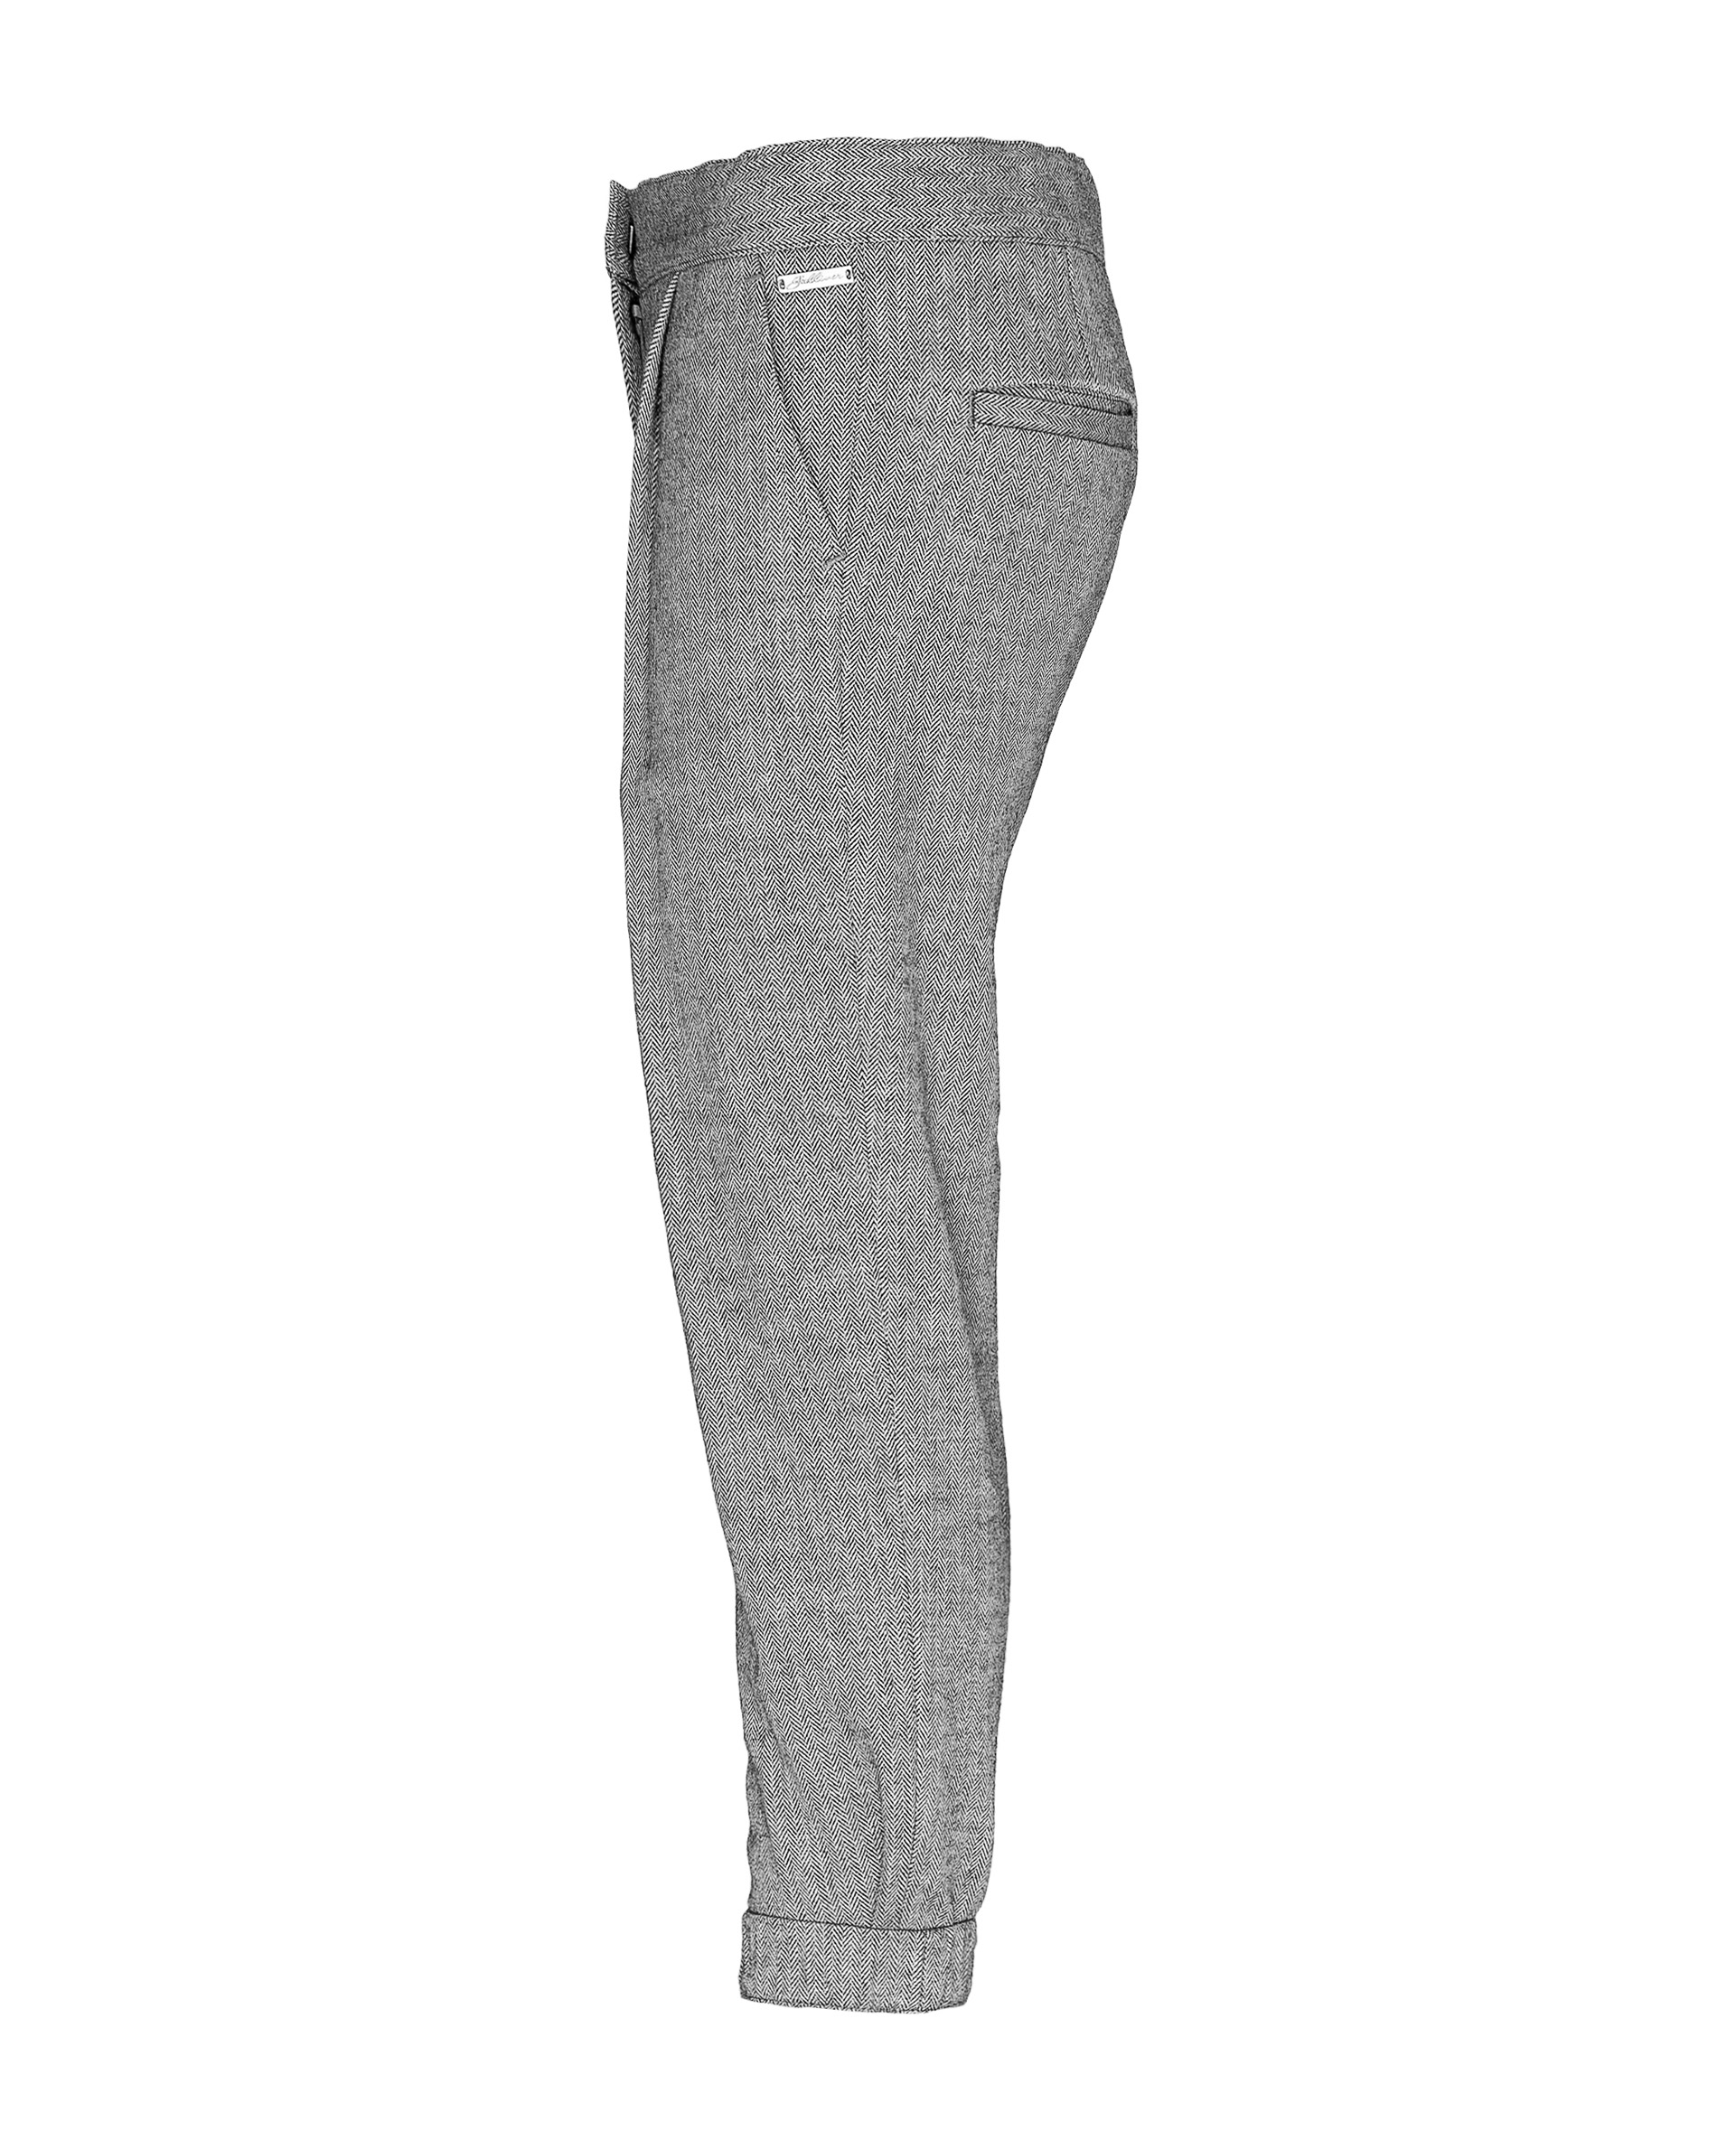 Серые брюки Gulliver 21901GMC6301, размер 104, цвет серый - фото 2